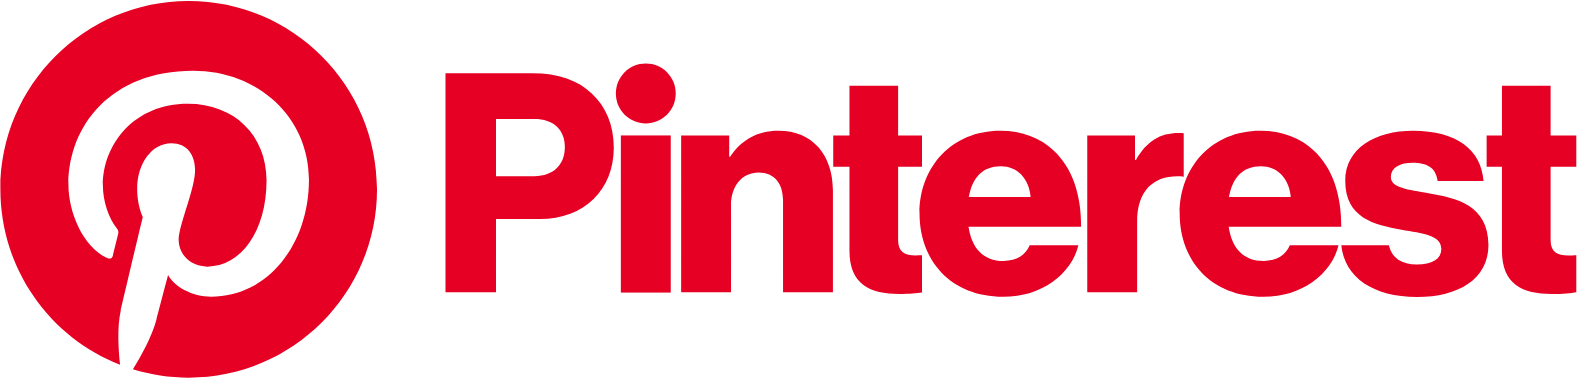 Pinterest logo large (transparent PNG)